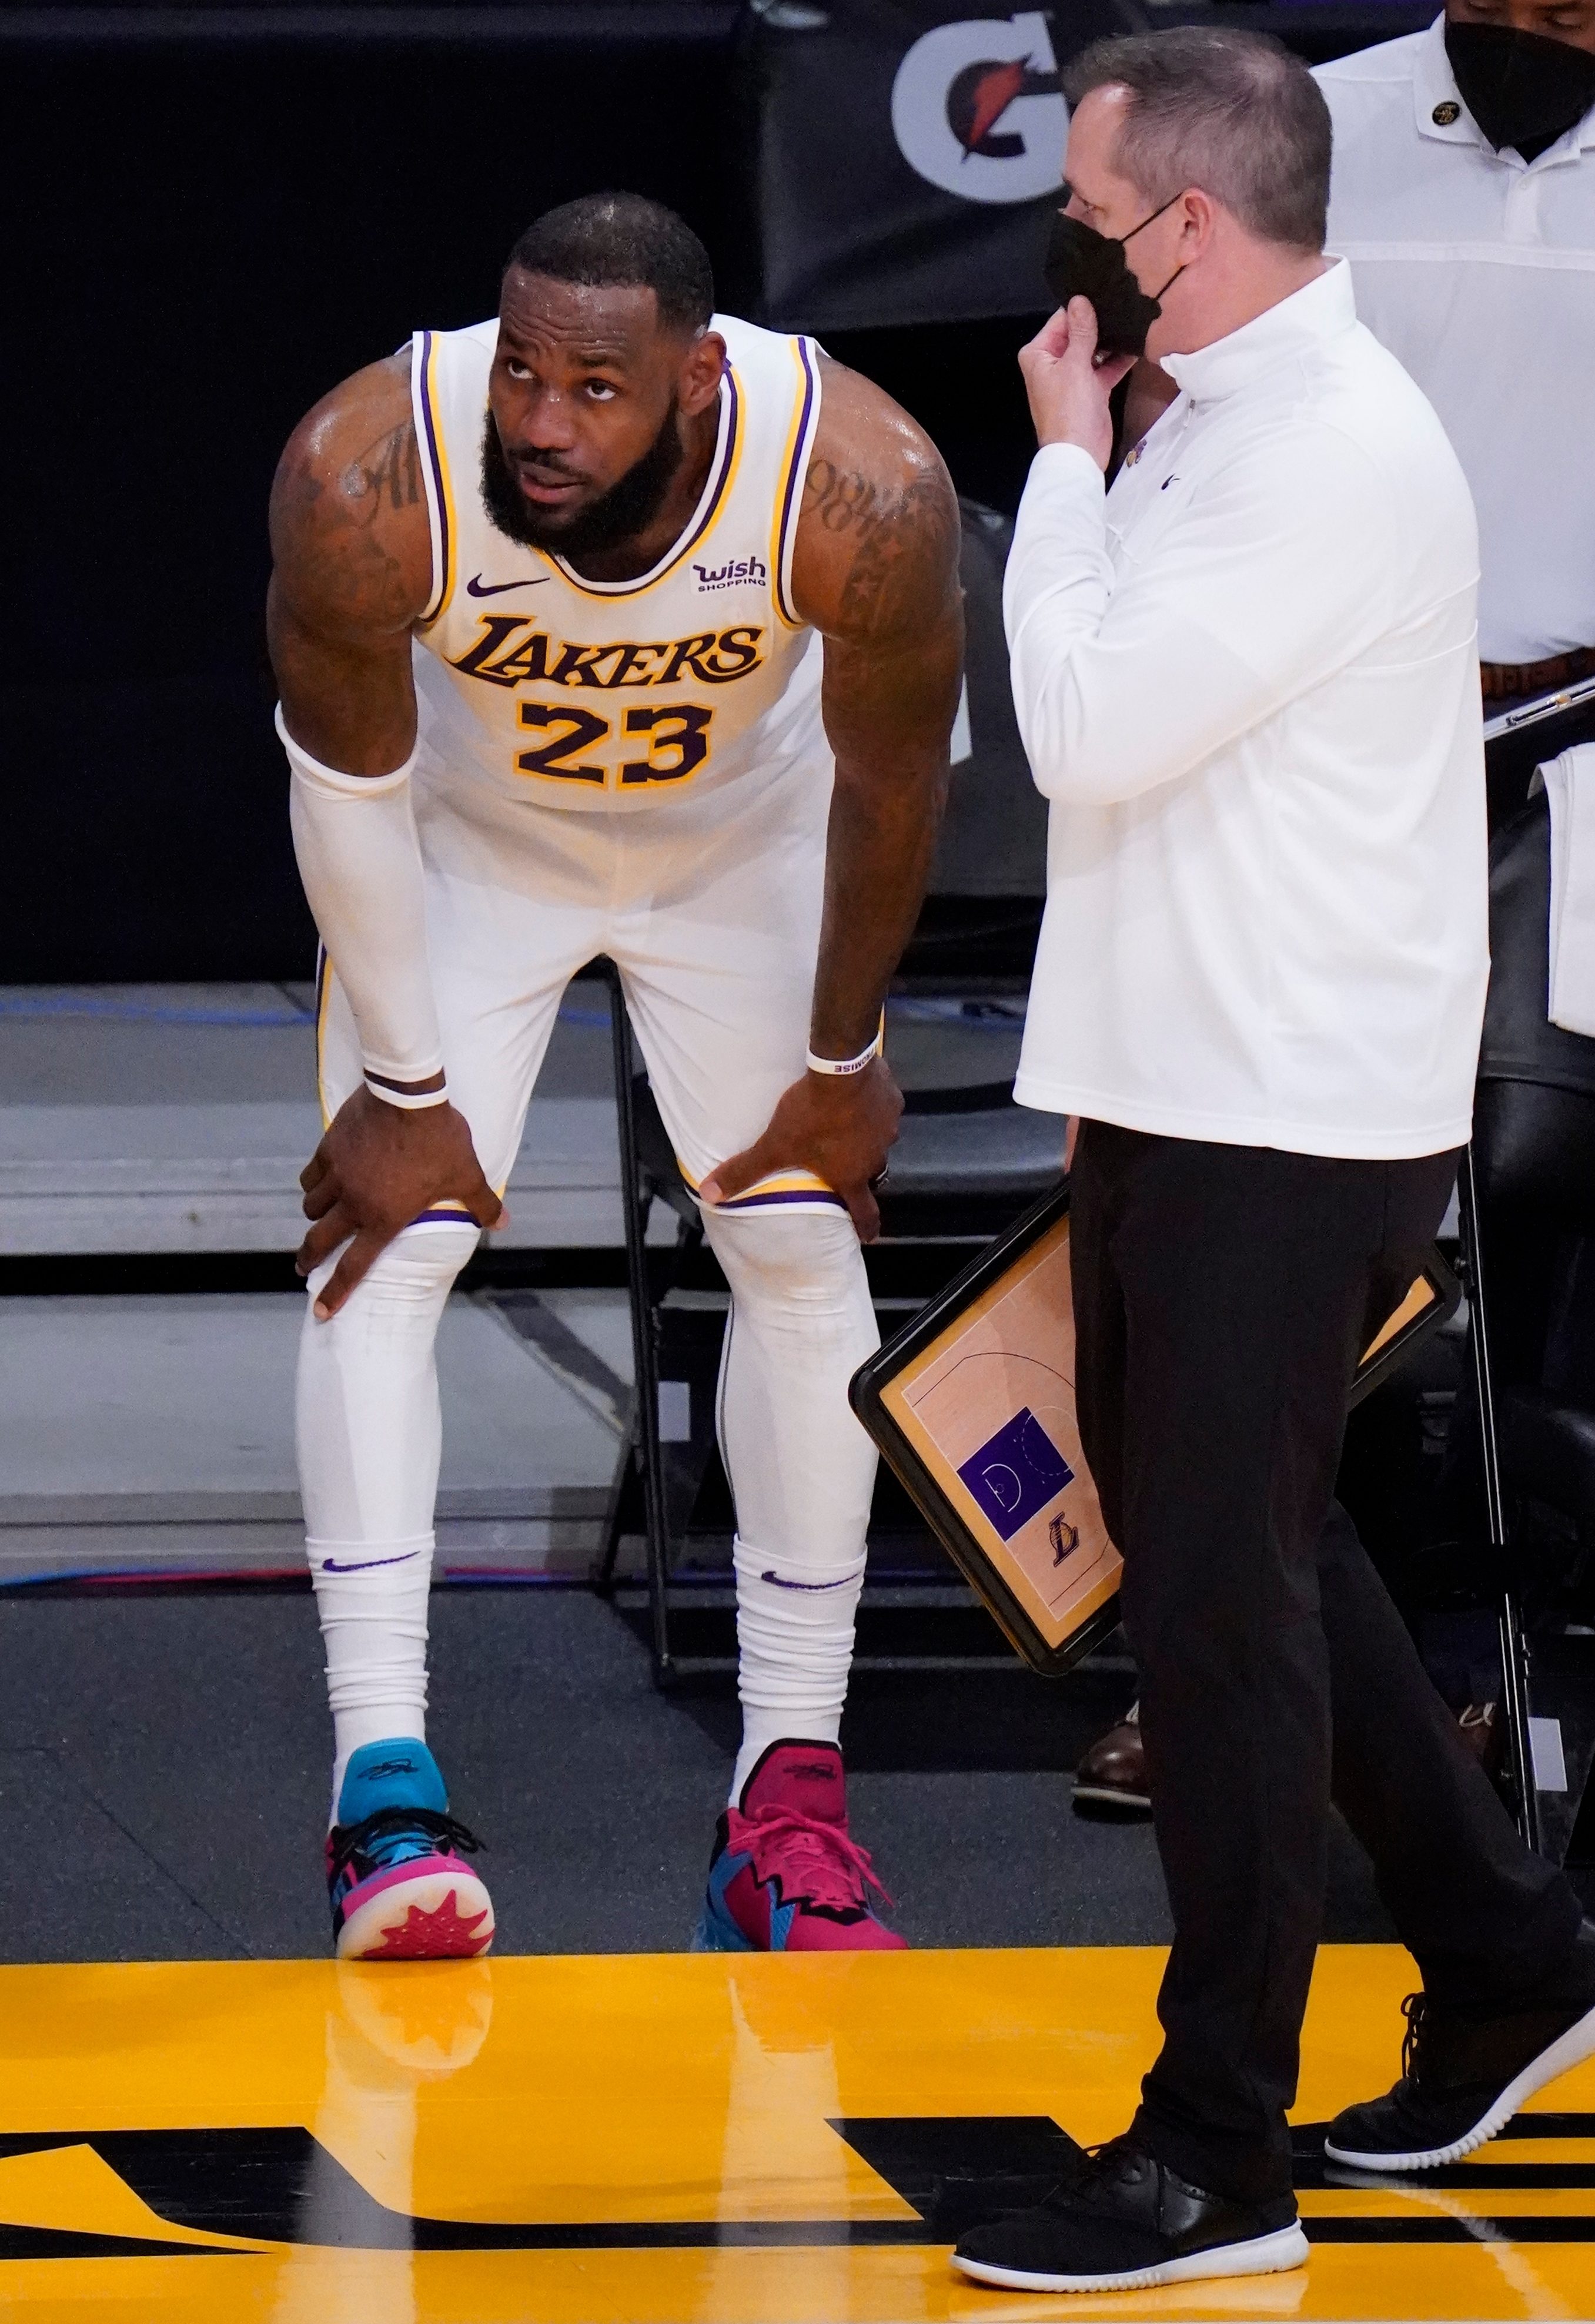 LeBron James injured as Hawks extend win streak vs Lakers